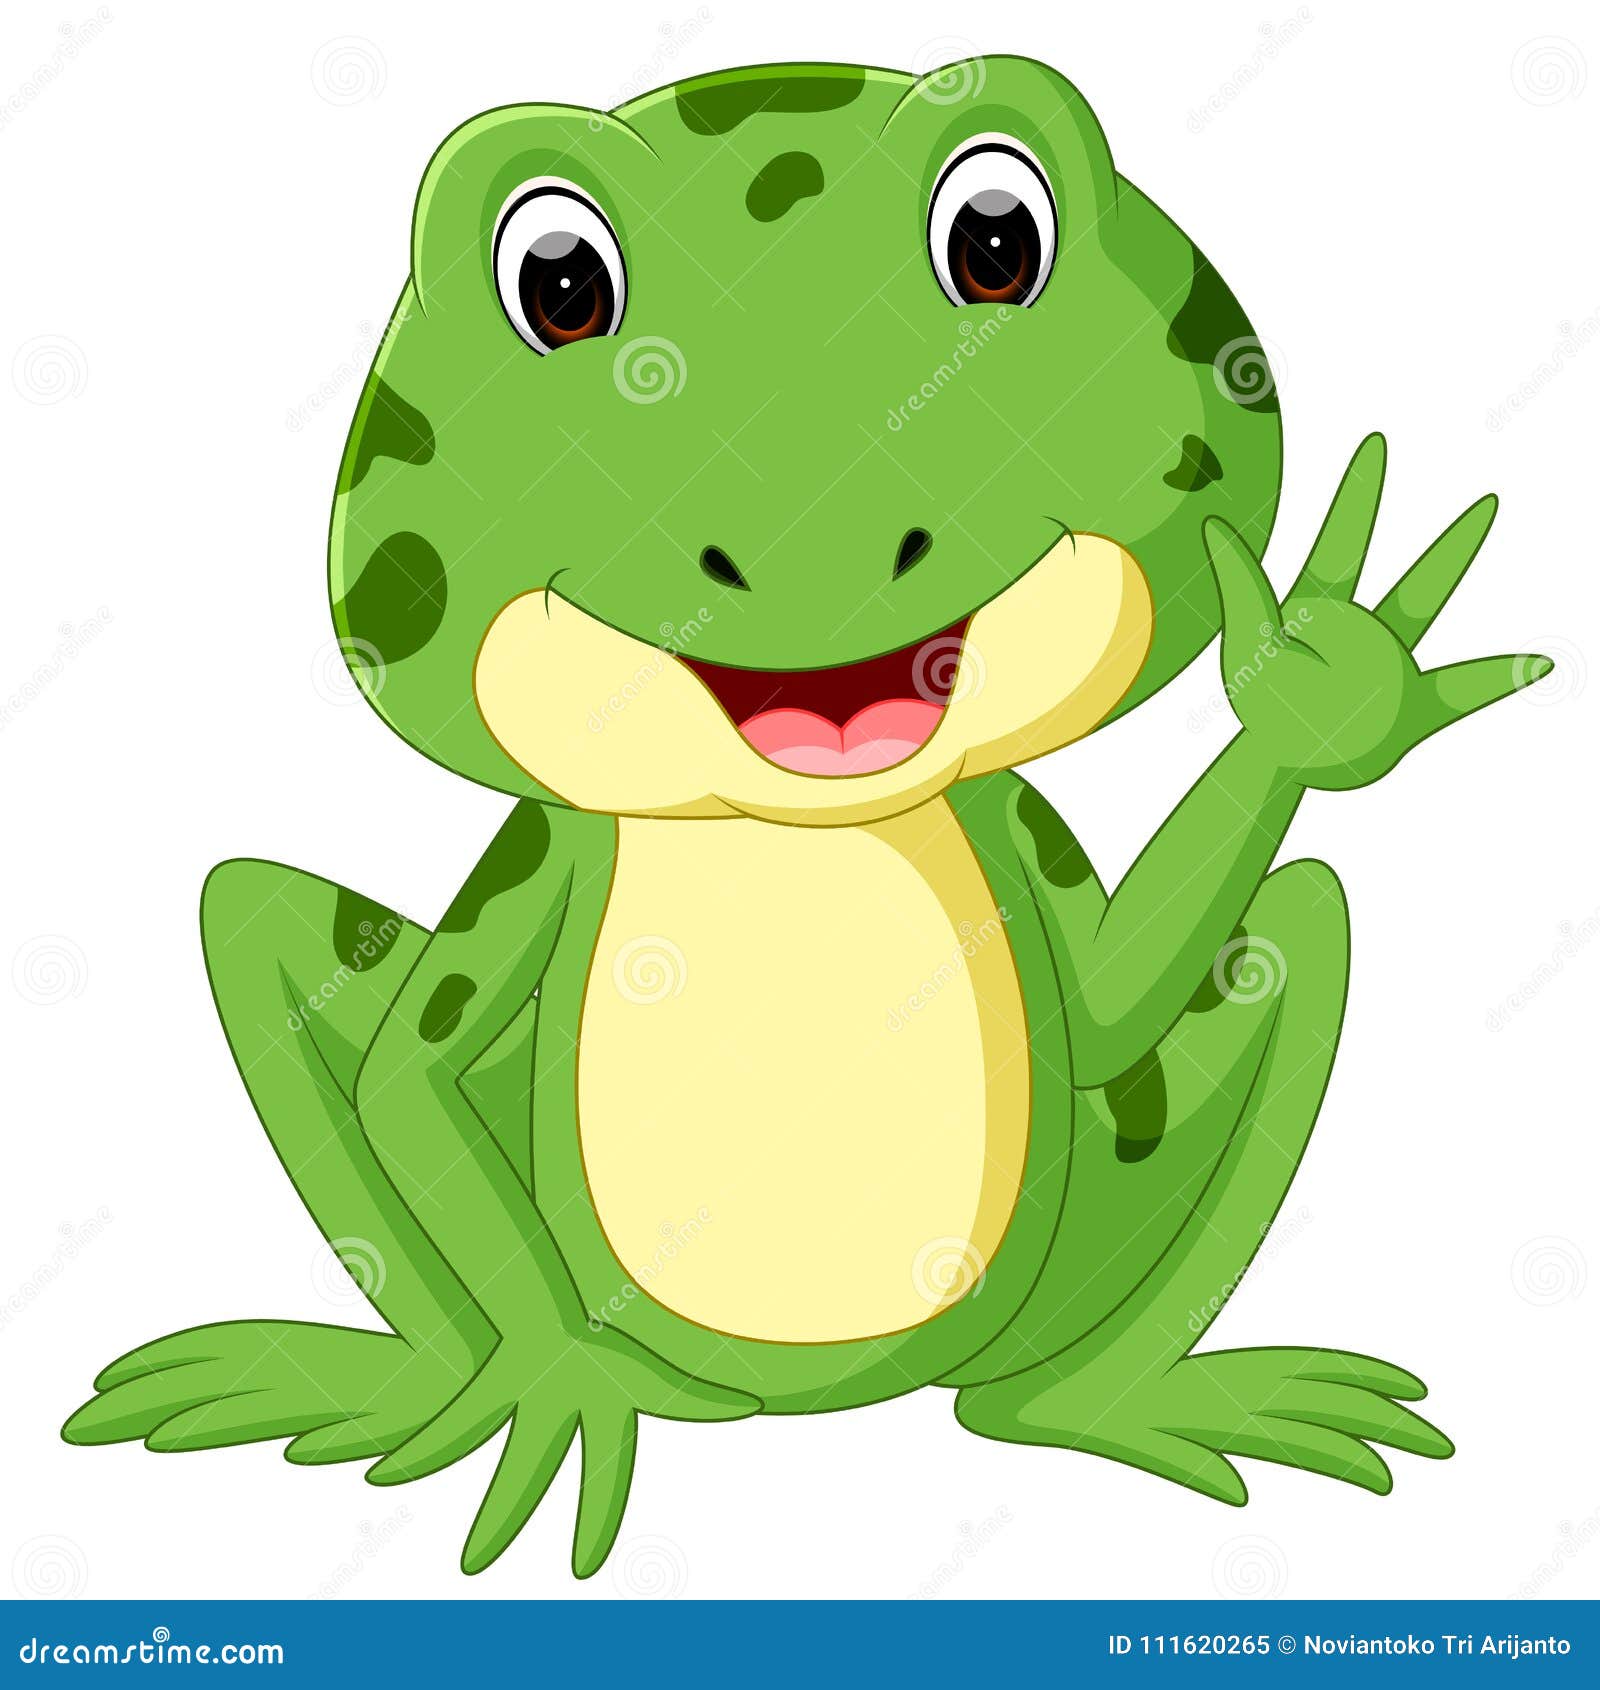 Cute frog cartoon stock vector. Illustration of jump - 111620265